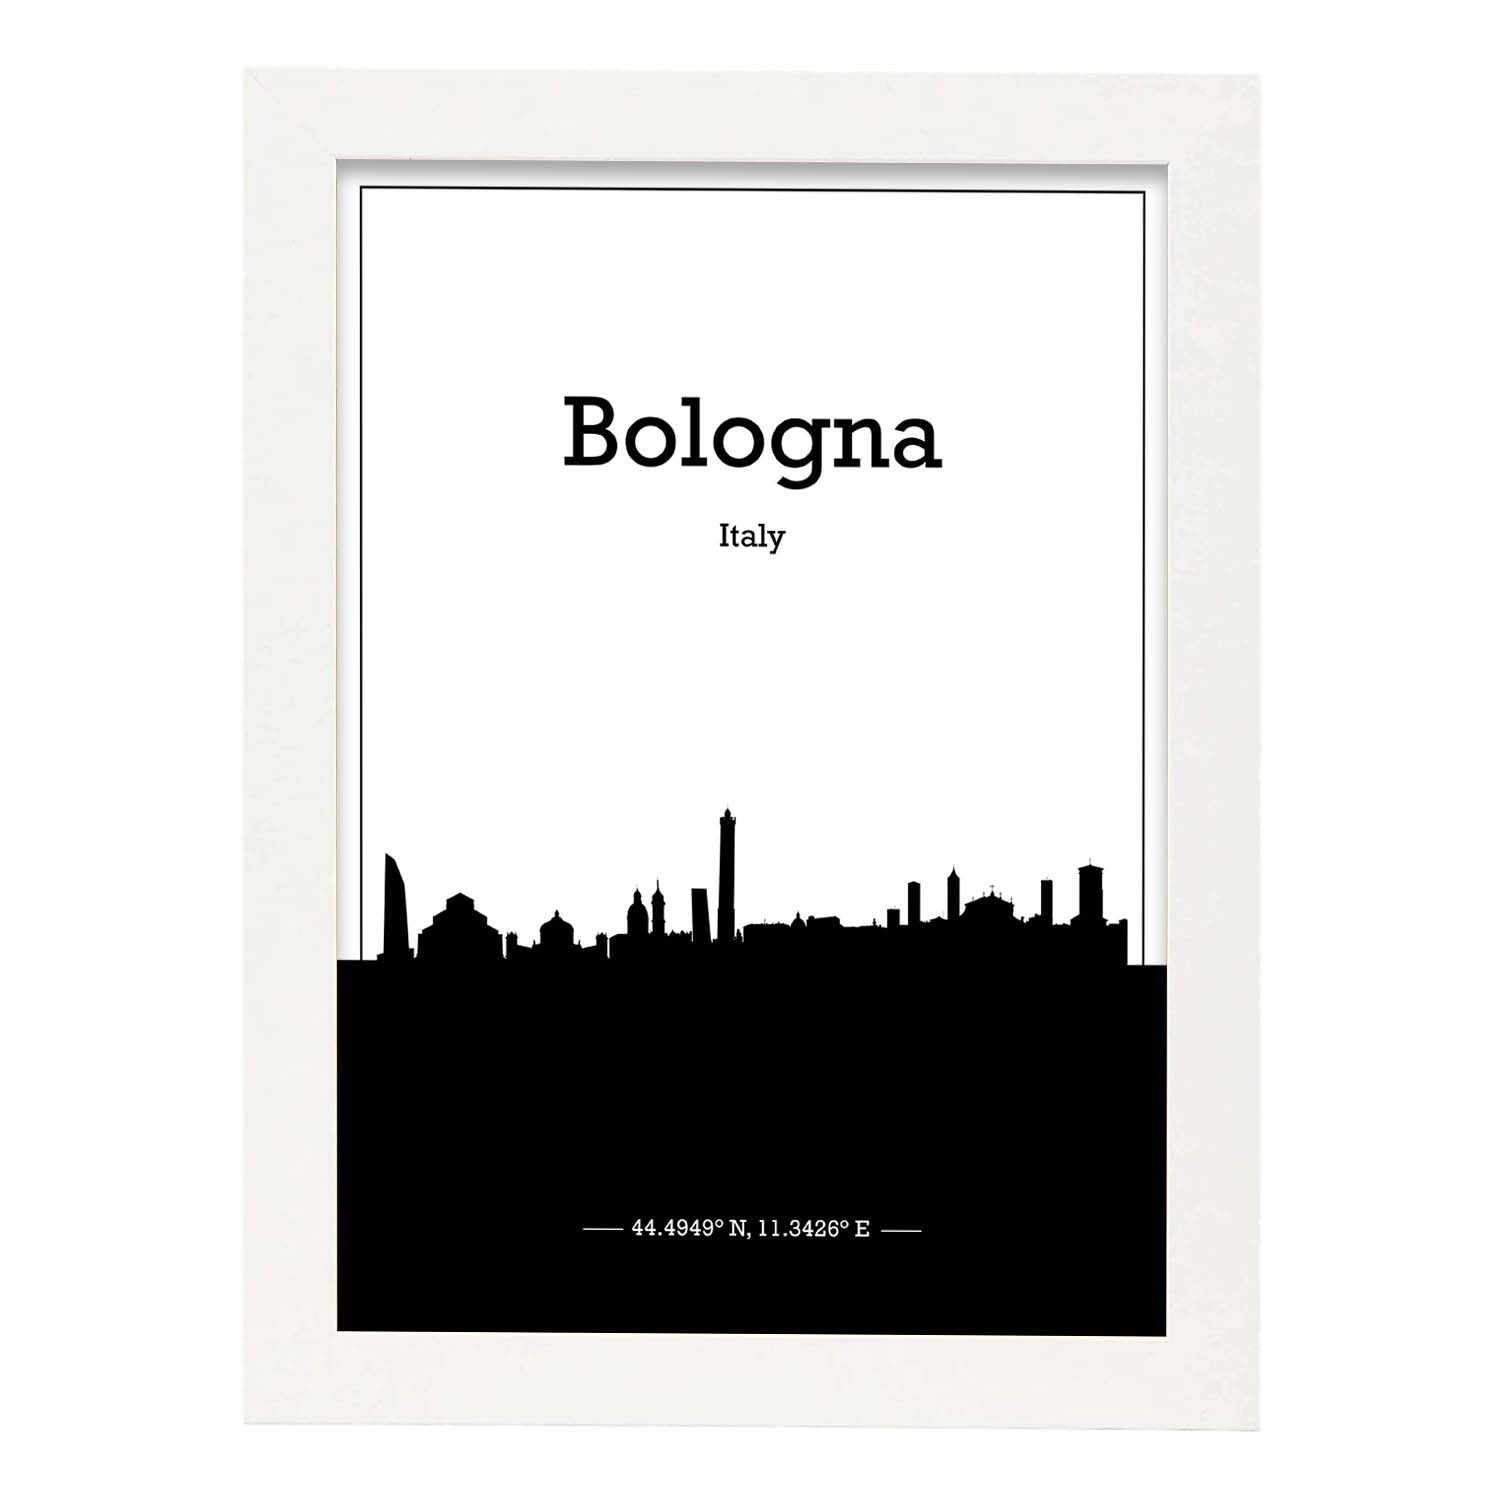 Poster con mapa de Bologna - Italia. Láminas con Skyline de ciudades de Italia con sombra negra.-Artwork-Nacnic-A3-Marco Blanco-Nacnic Estudio SL